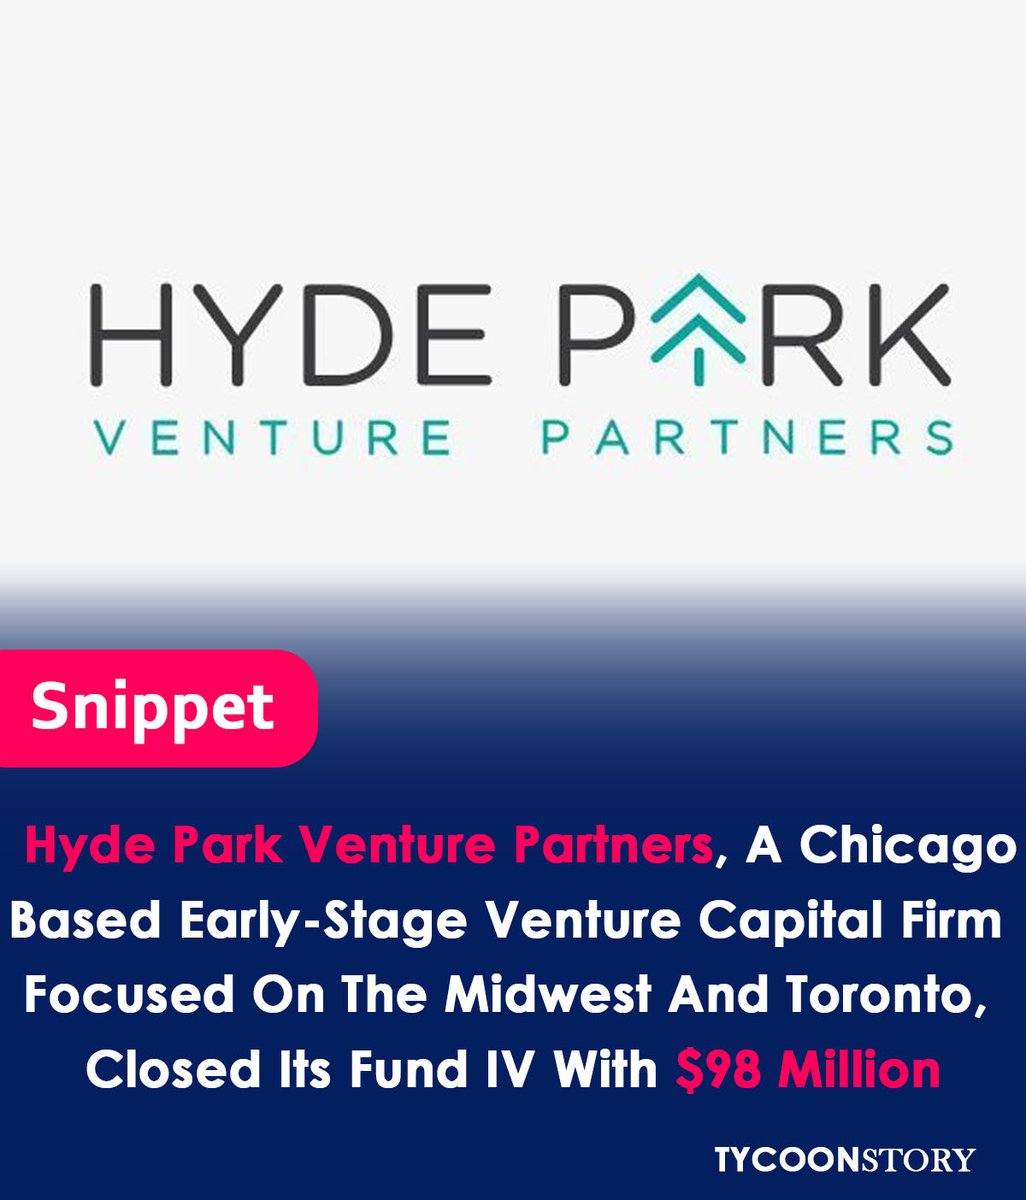 Hyde Park Venture Partners raised $98 million for its Fund IV.
#MidwestVentureCapital #TechInvestment #HydeParkVenturePartners #Fundraising #Entrepreneurship #Startup #Ecosystem #TechStartups #Investment #Trends #VentureCapitalists #Technology #Innovation @hydeparkvp